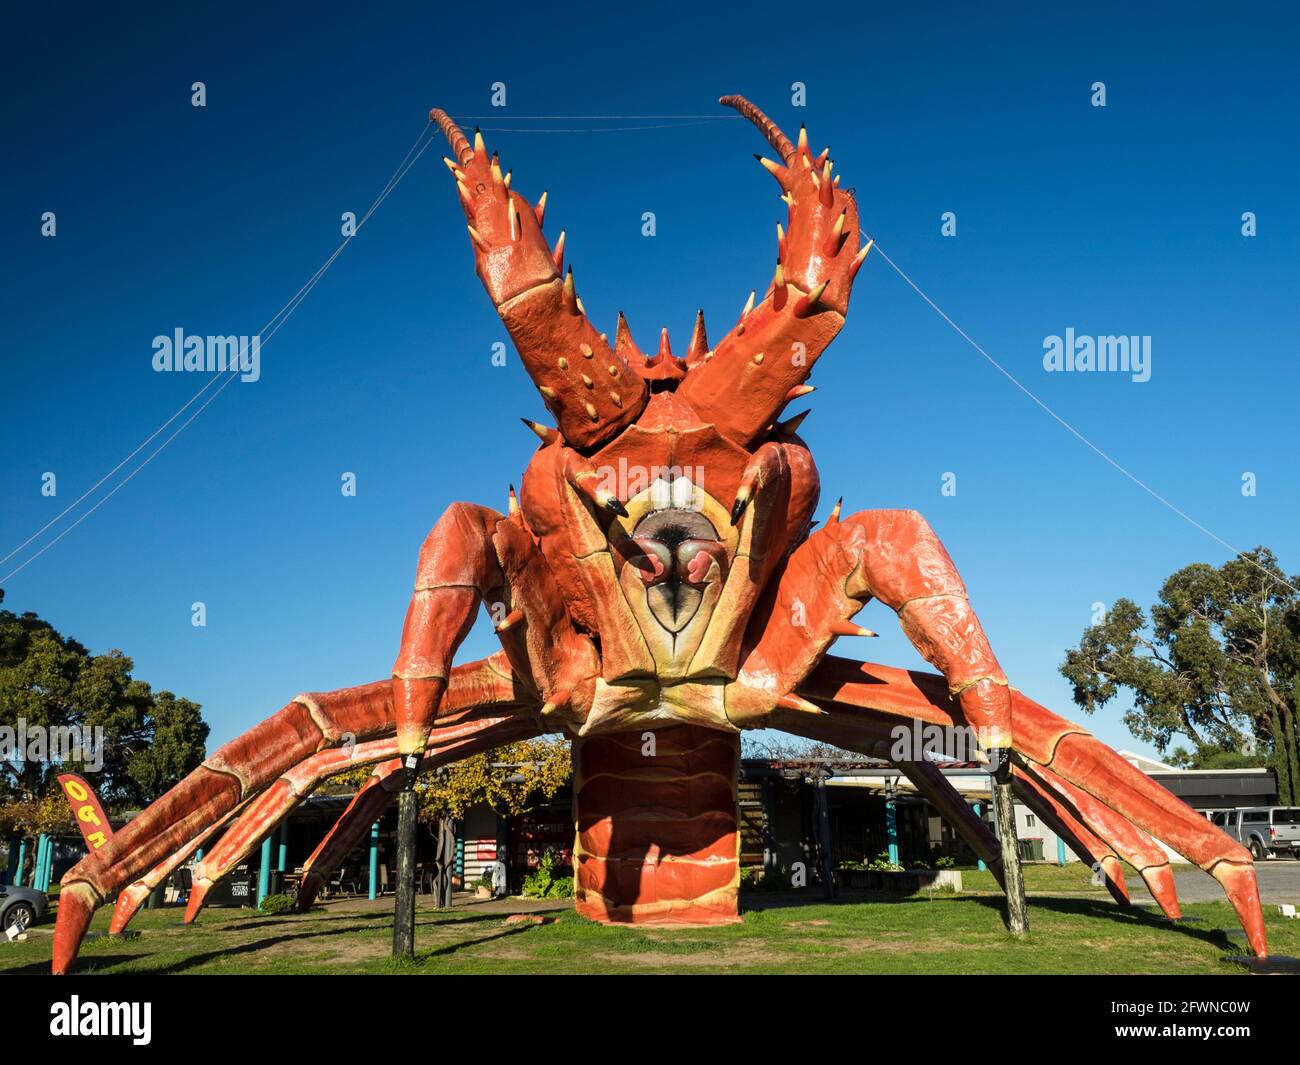 The Big Lobster, Kingston se, Australie-Méridionale. Banque D'Images